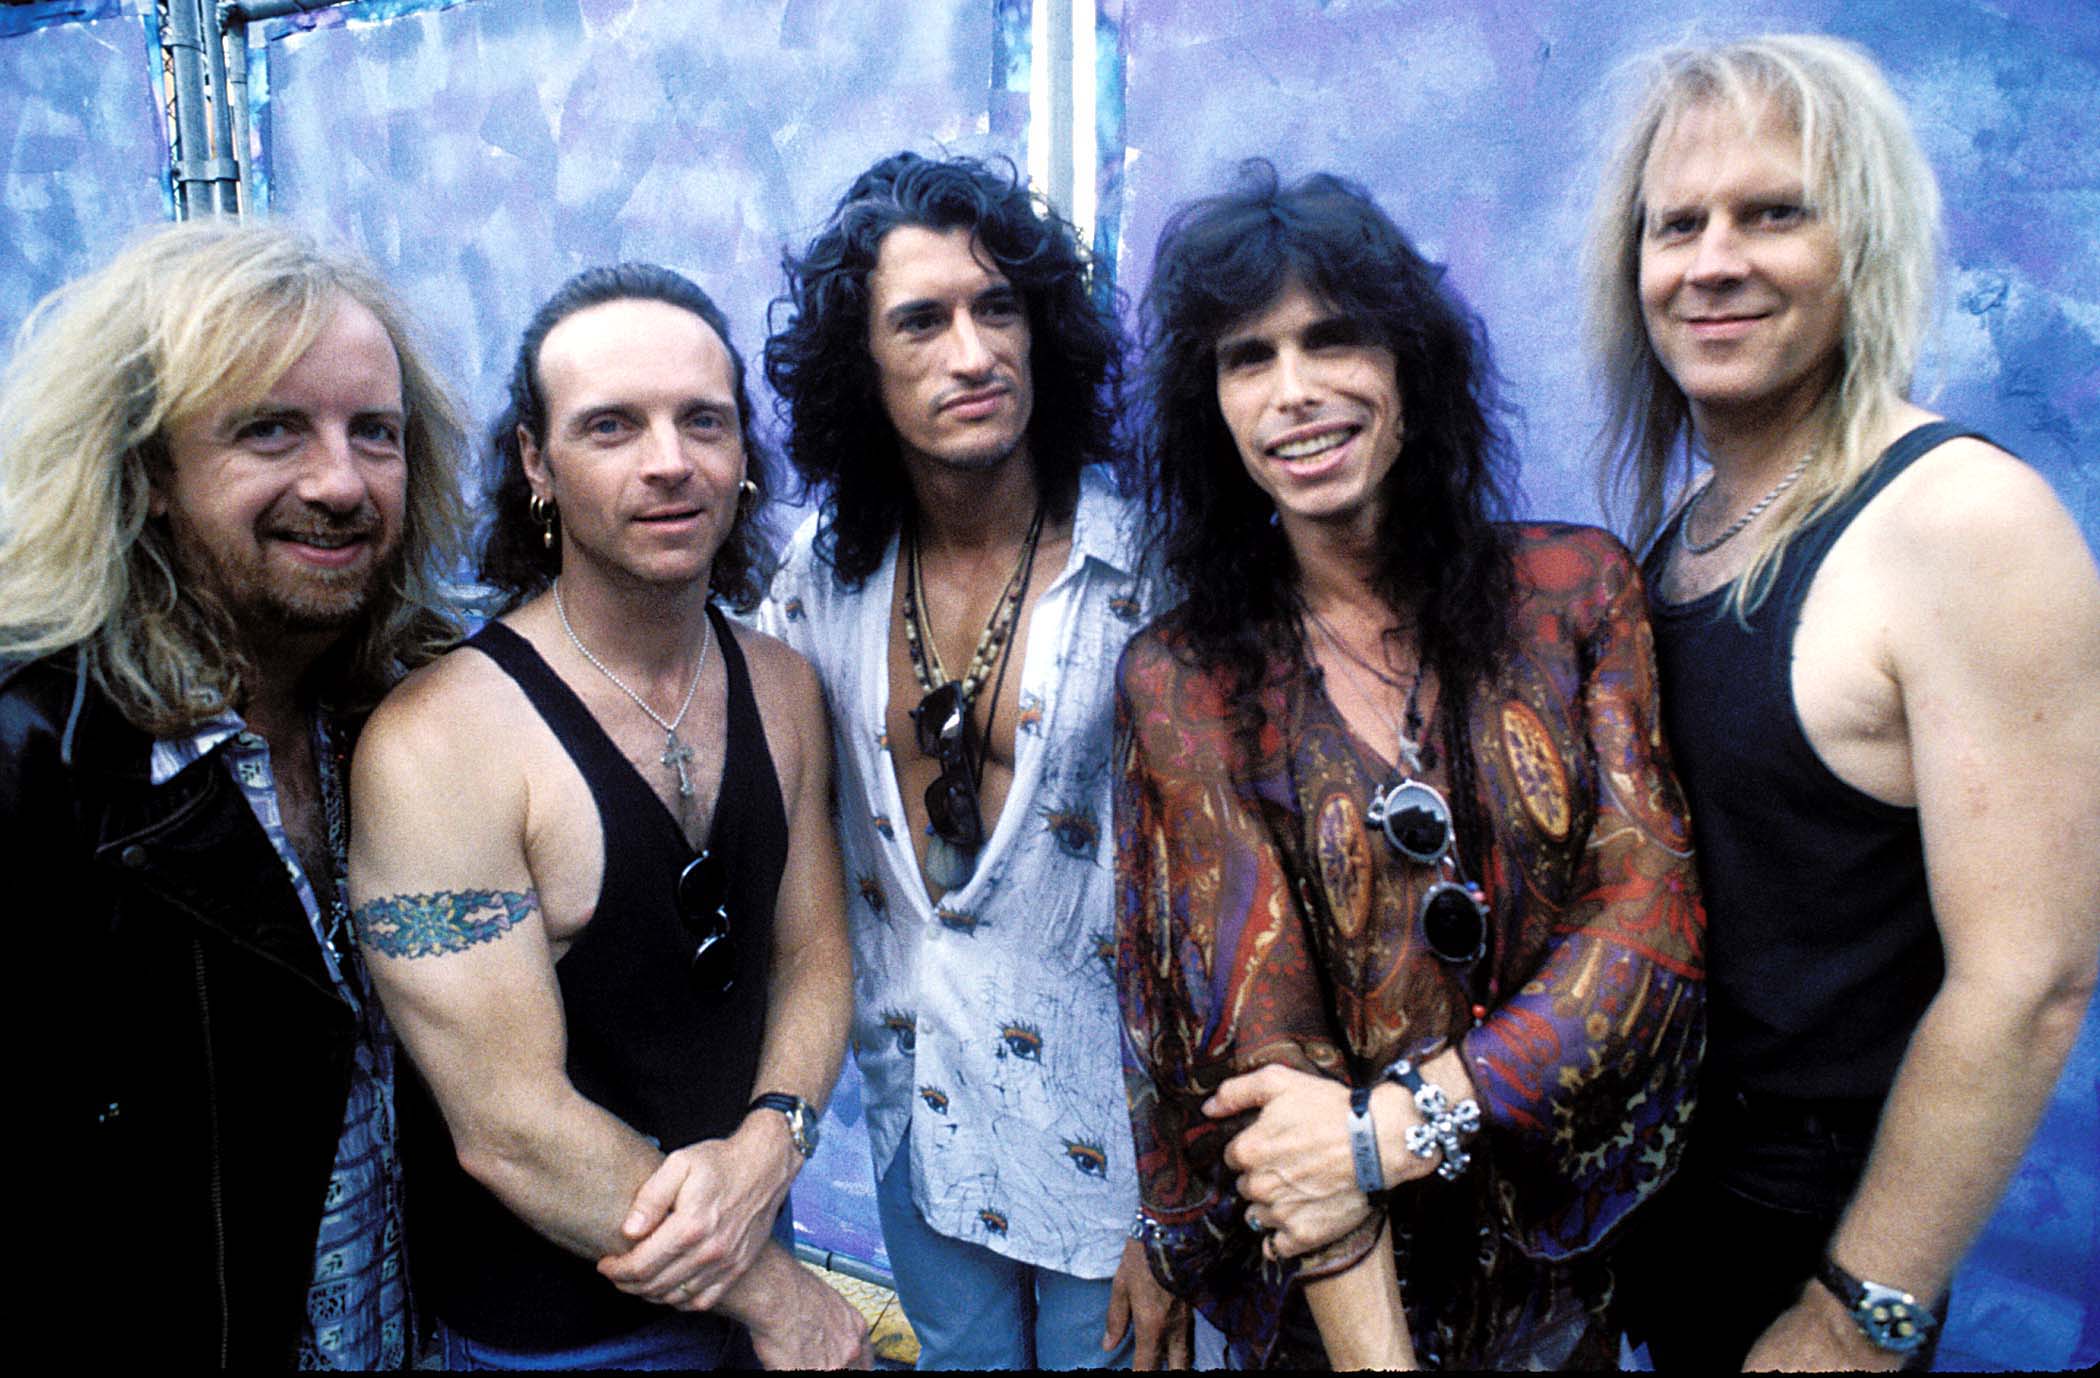 Aerosmith's Brad Whitford, Joey Kramer, Joe Perry, Steve Tyler, and Tom Hamilton in front of a wall